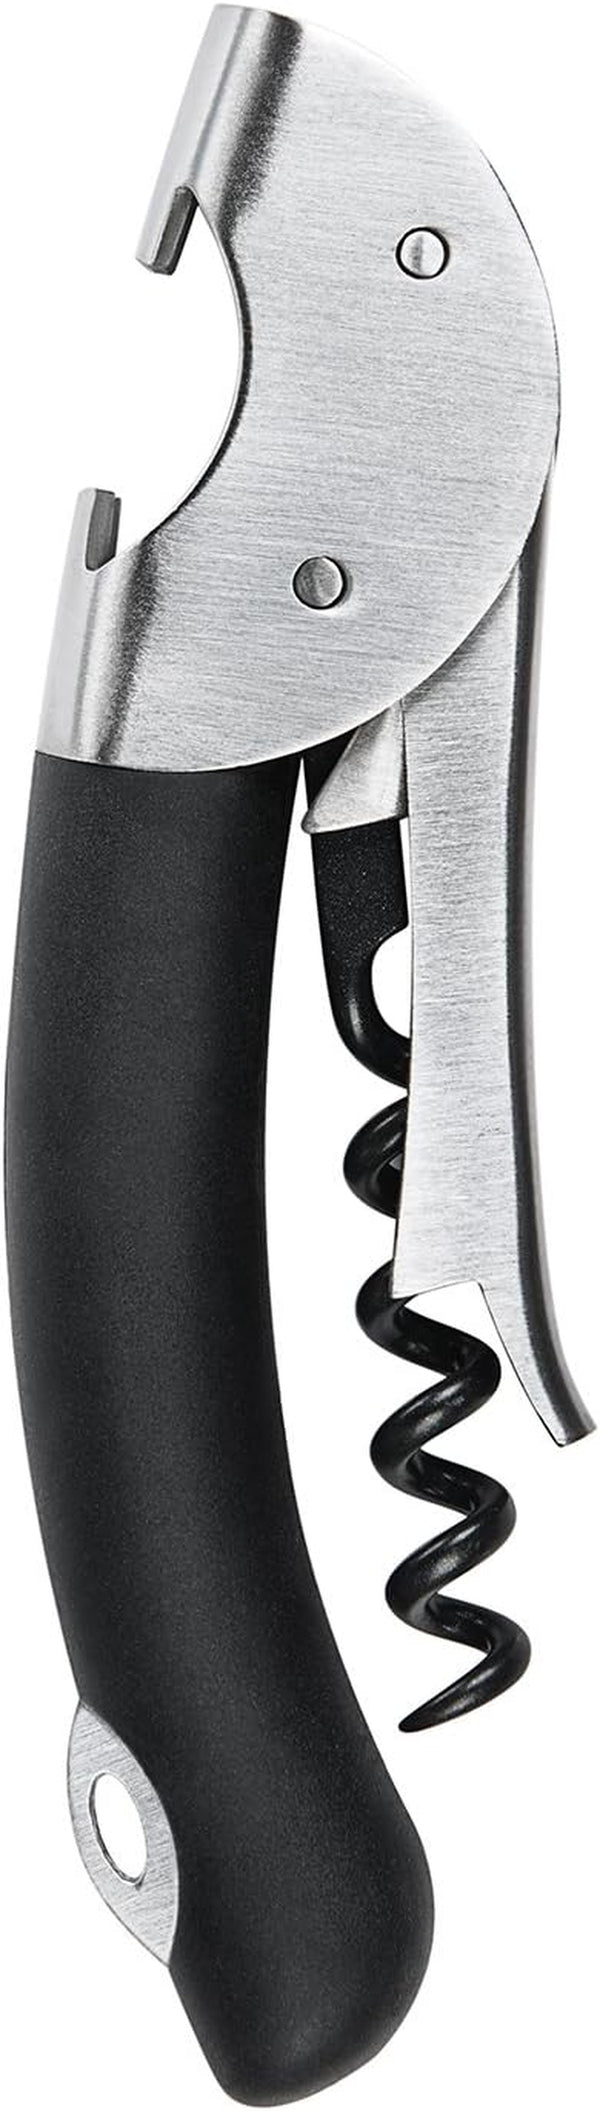 OXO Steel Double Lever Waiter's Corkscrew,Silver/Black,1 CT